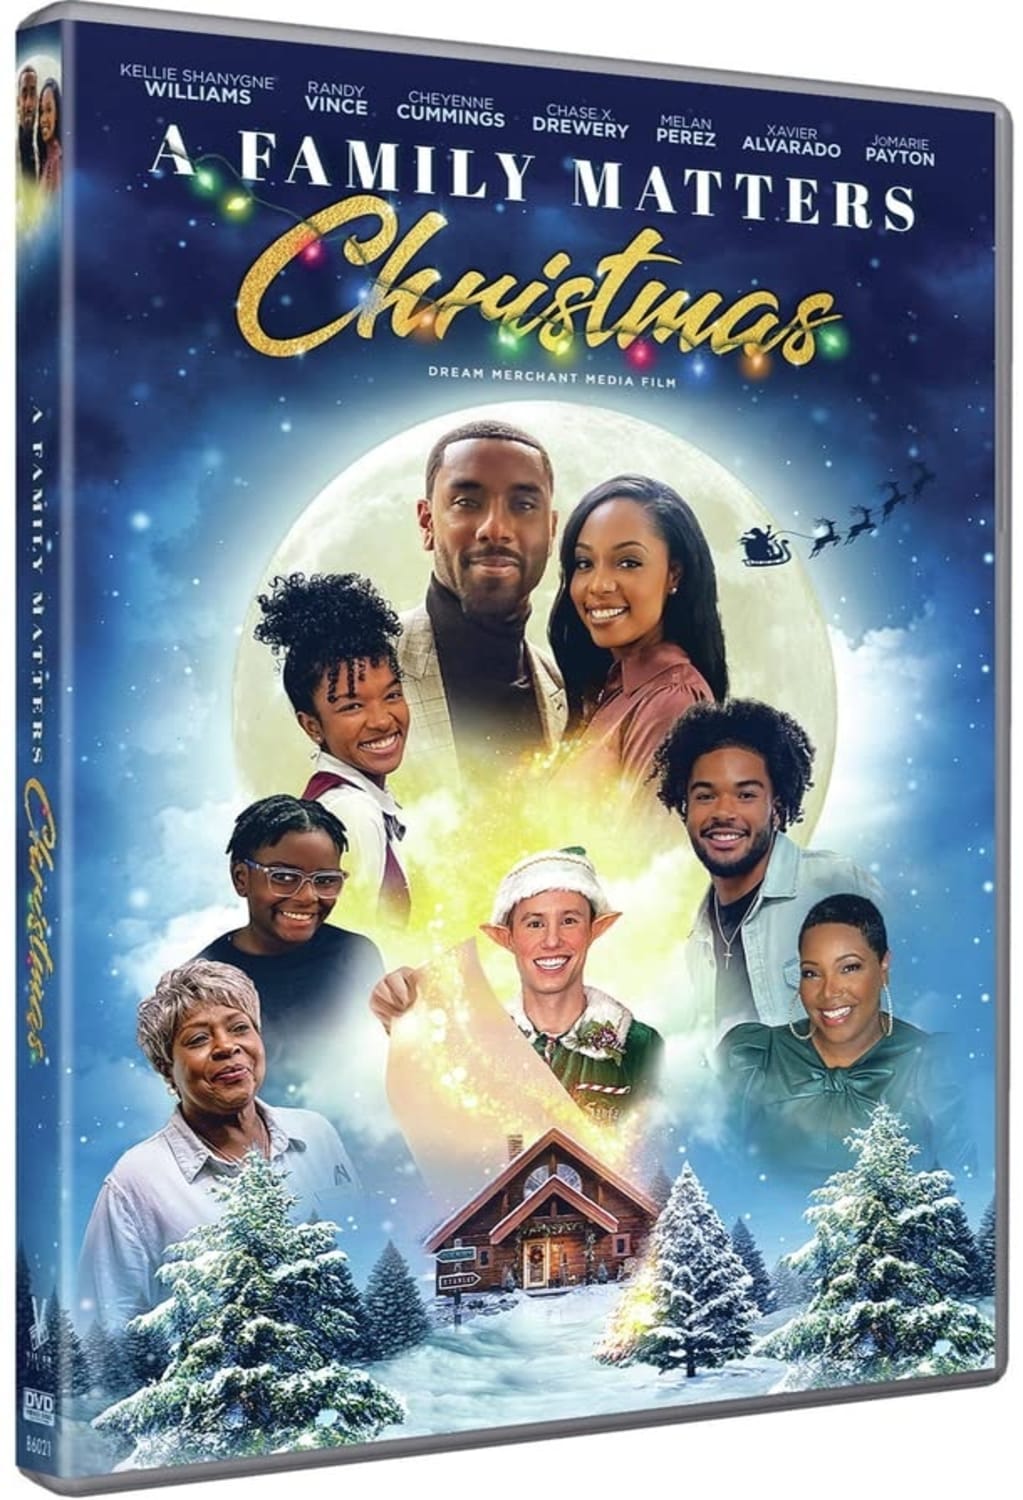 FAMILY MATTERS CHRISTMAS on MovieShack